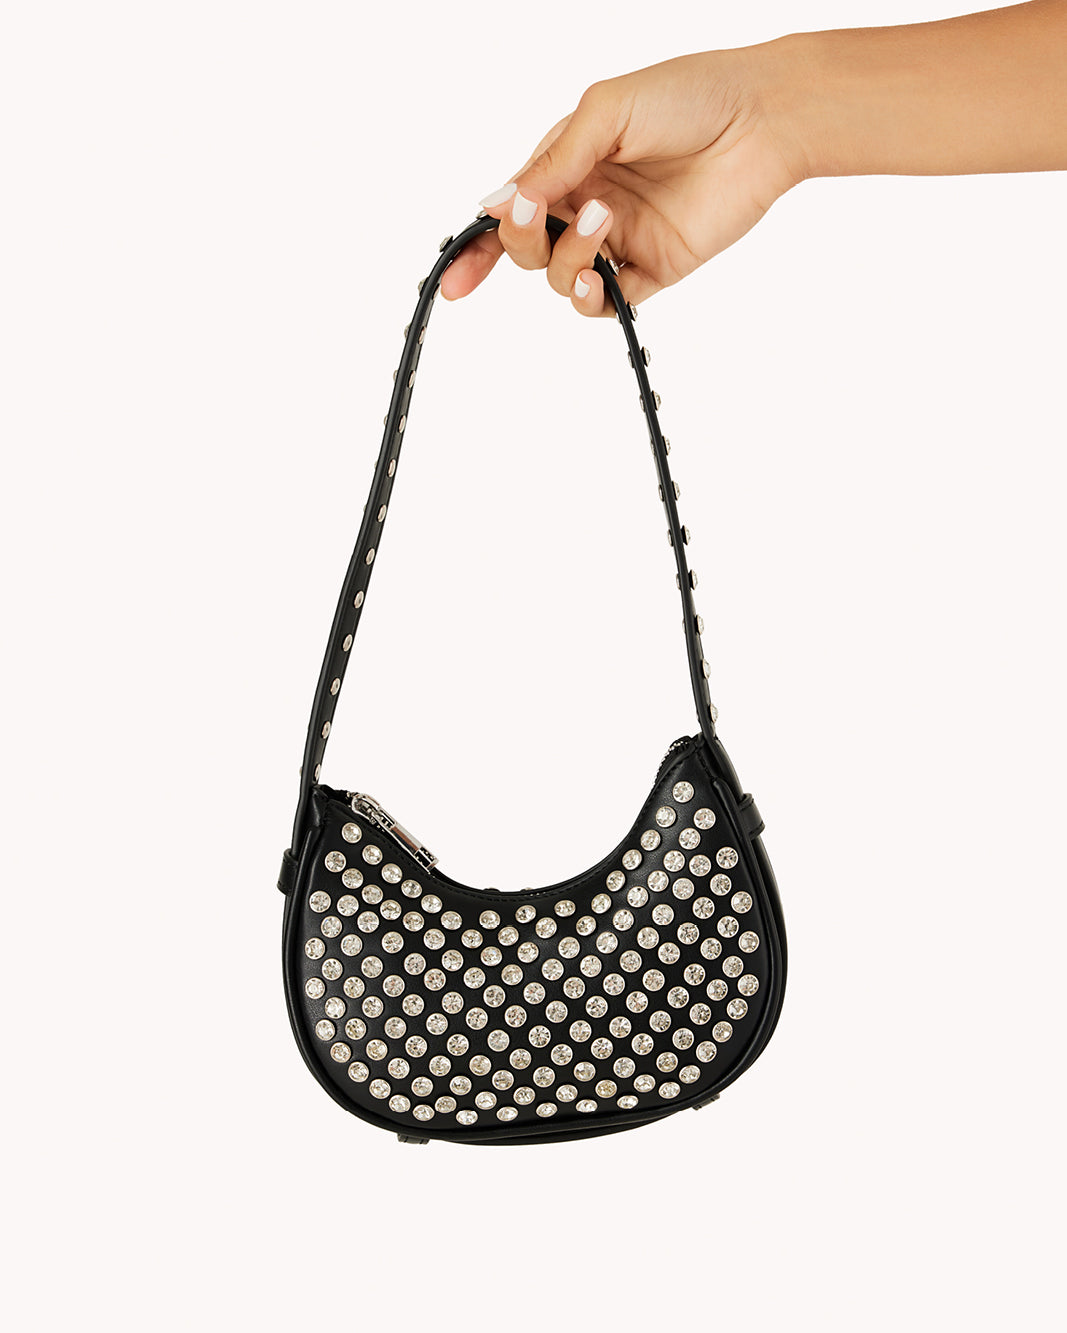 JASLYN SHOULDER BAG - BLACK-Handbags-Billini-O/S-Billini